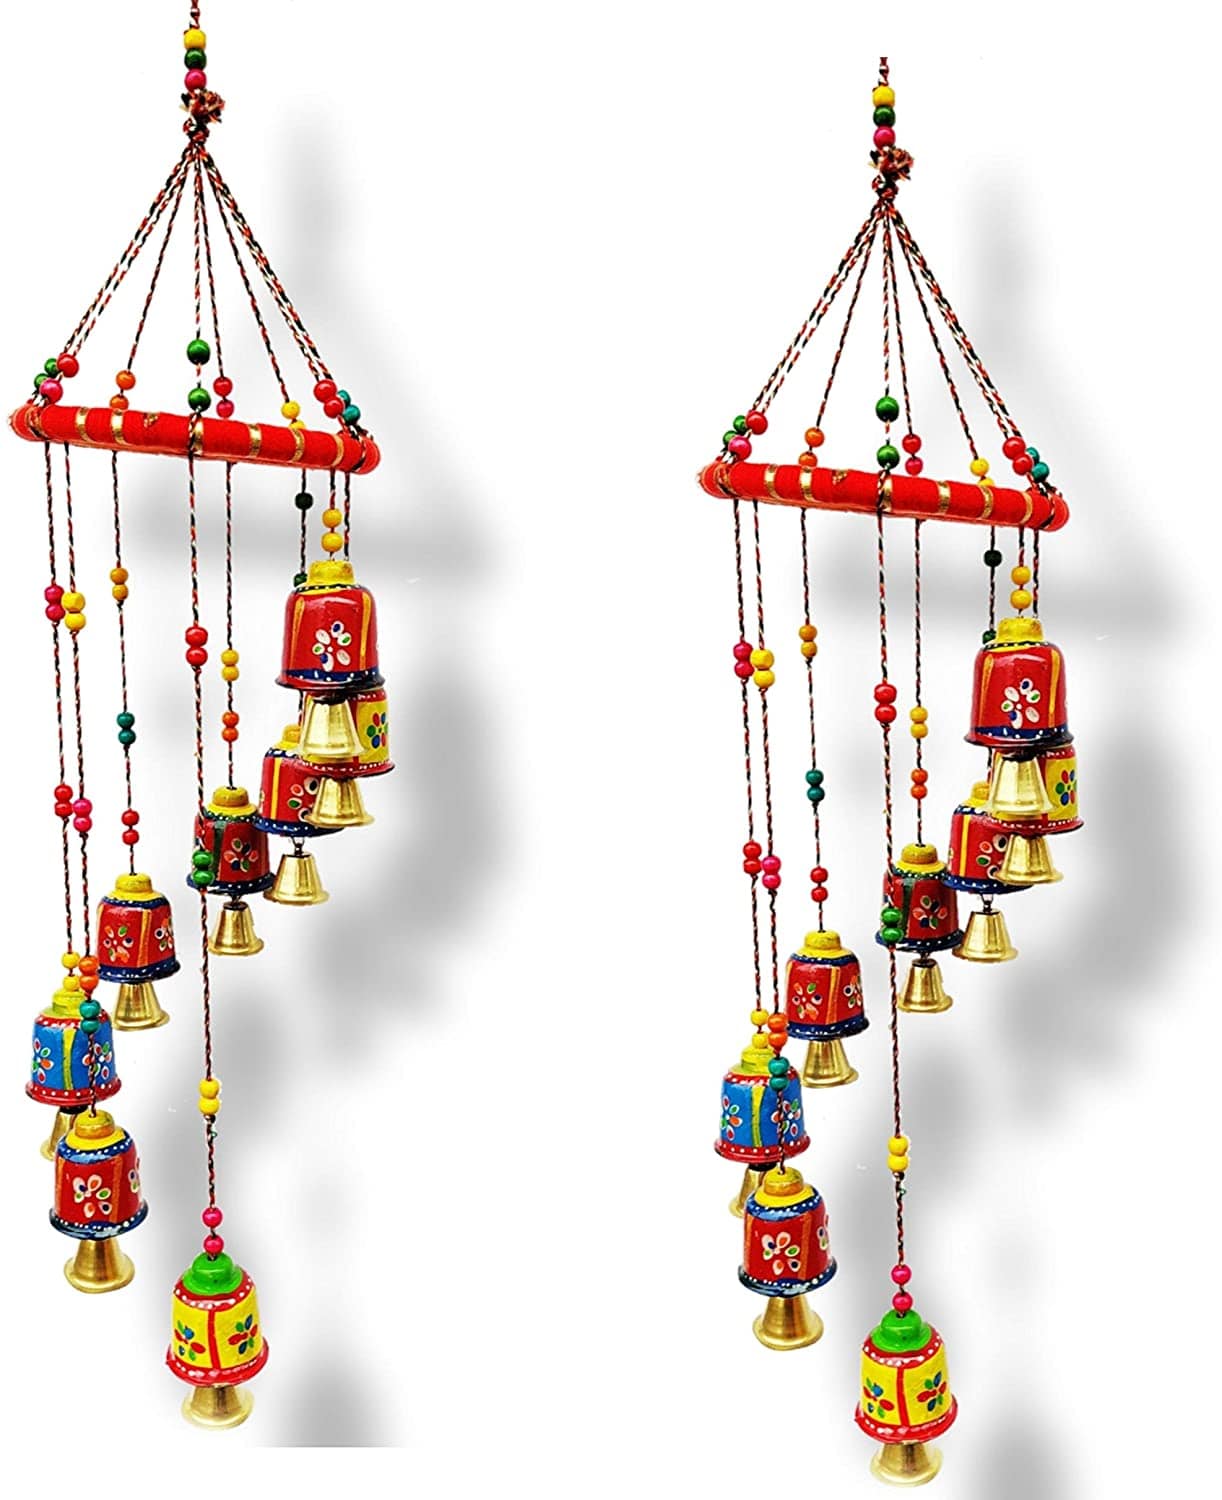 Bell Hanging Toran set For Home Decor / Bell Toran Set For Decoration / Festive decoration Toran / Hanging Toran set 